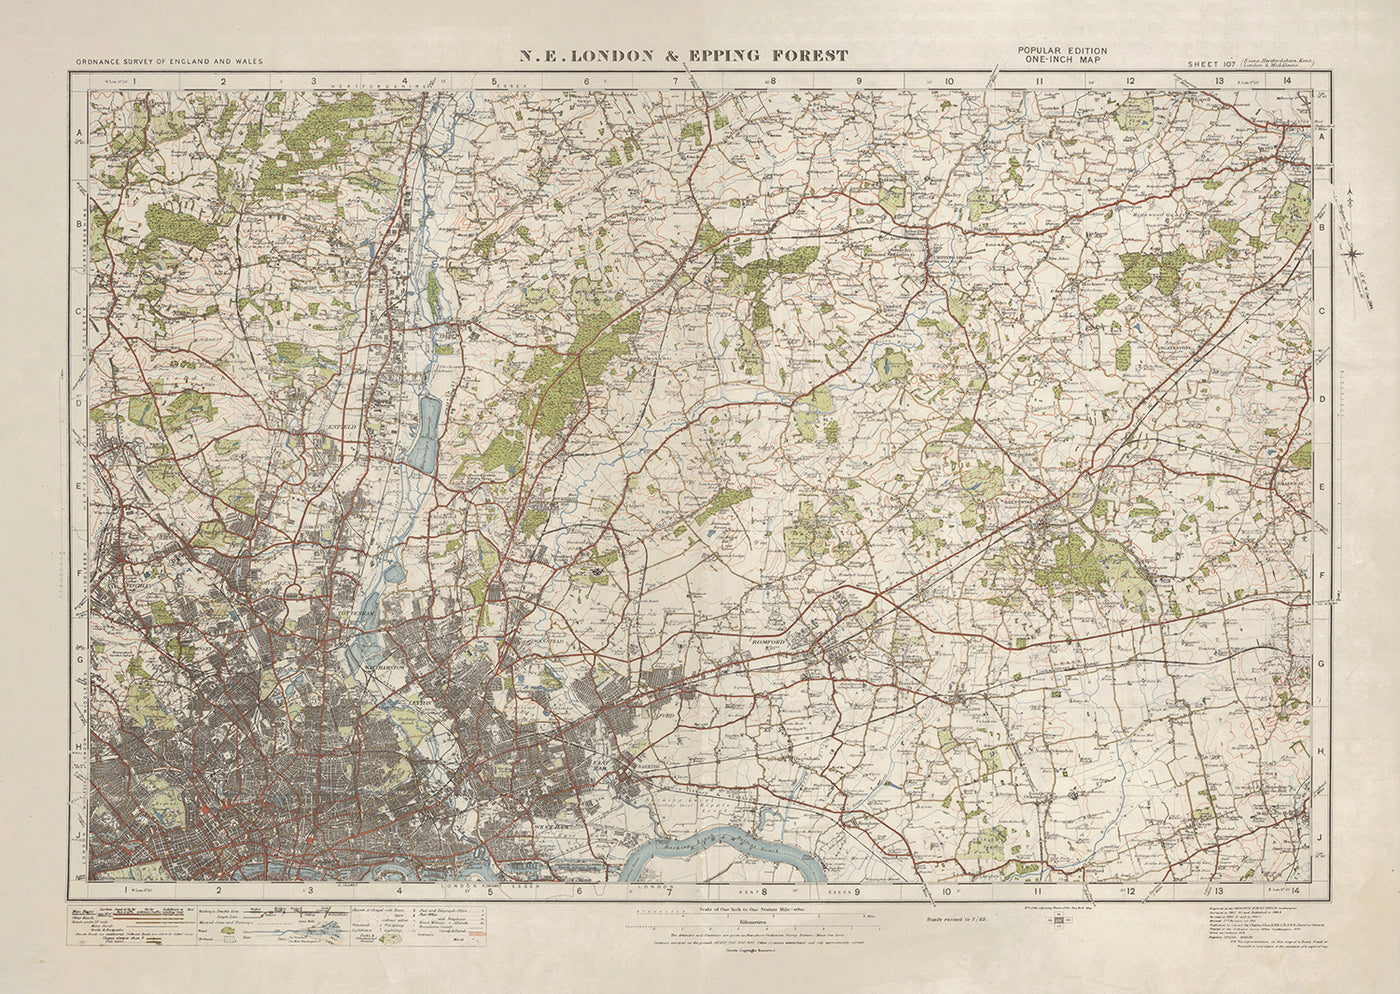 Mapa de Old Ordnance Survey, hoja 107 - NE de Londres y Epping Forest, 1925: Brentwood, Romford, West Ham, Enfield, Finchley